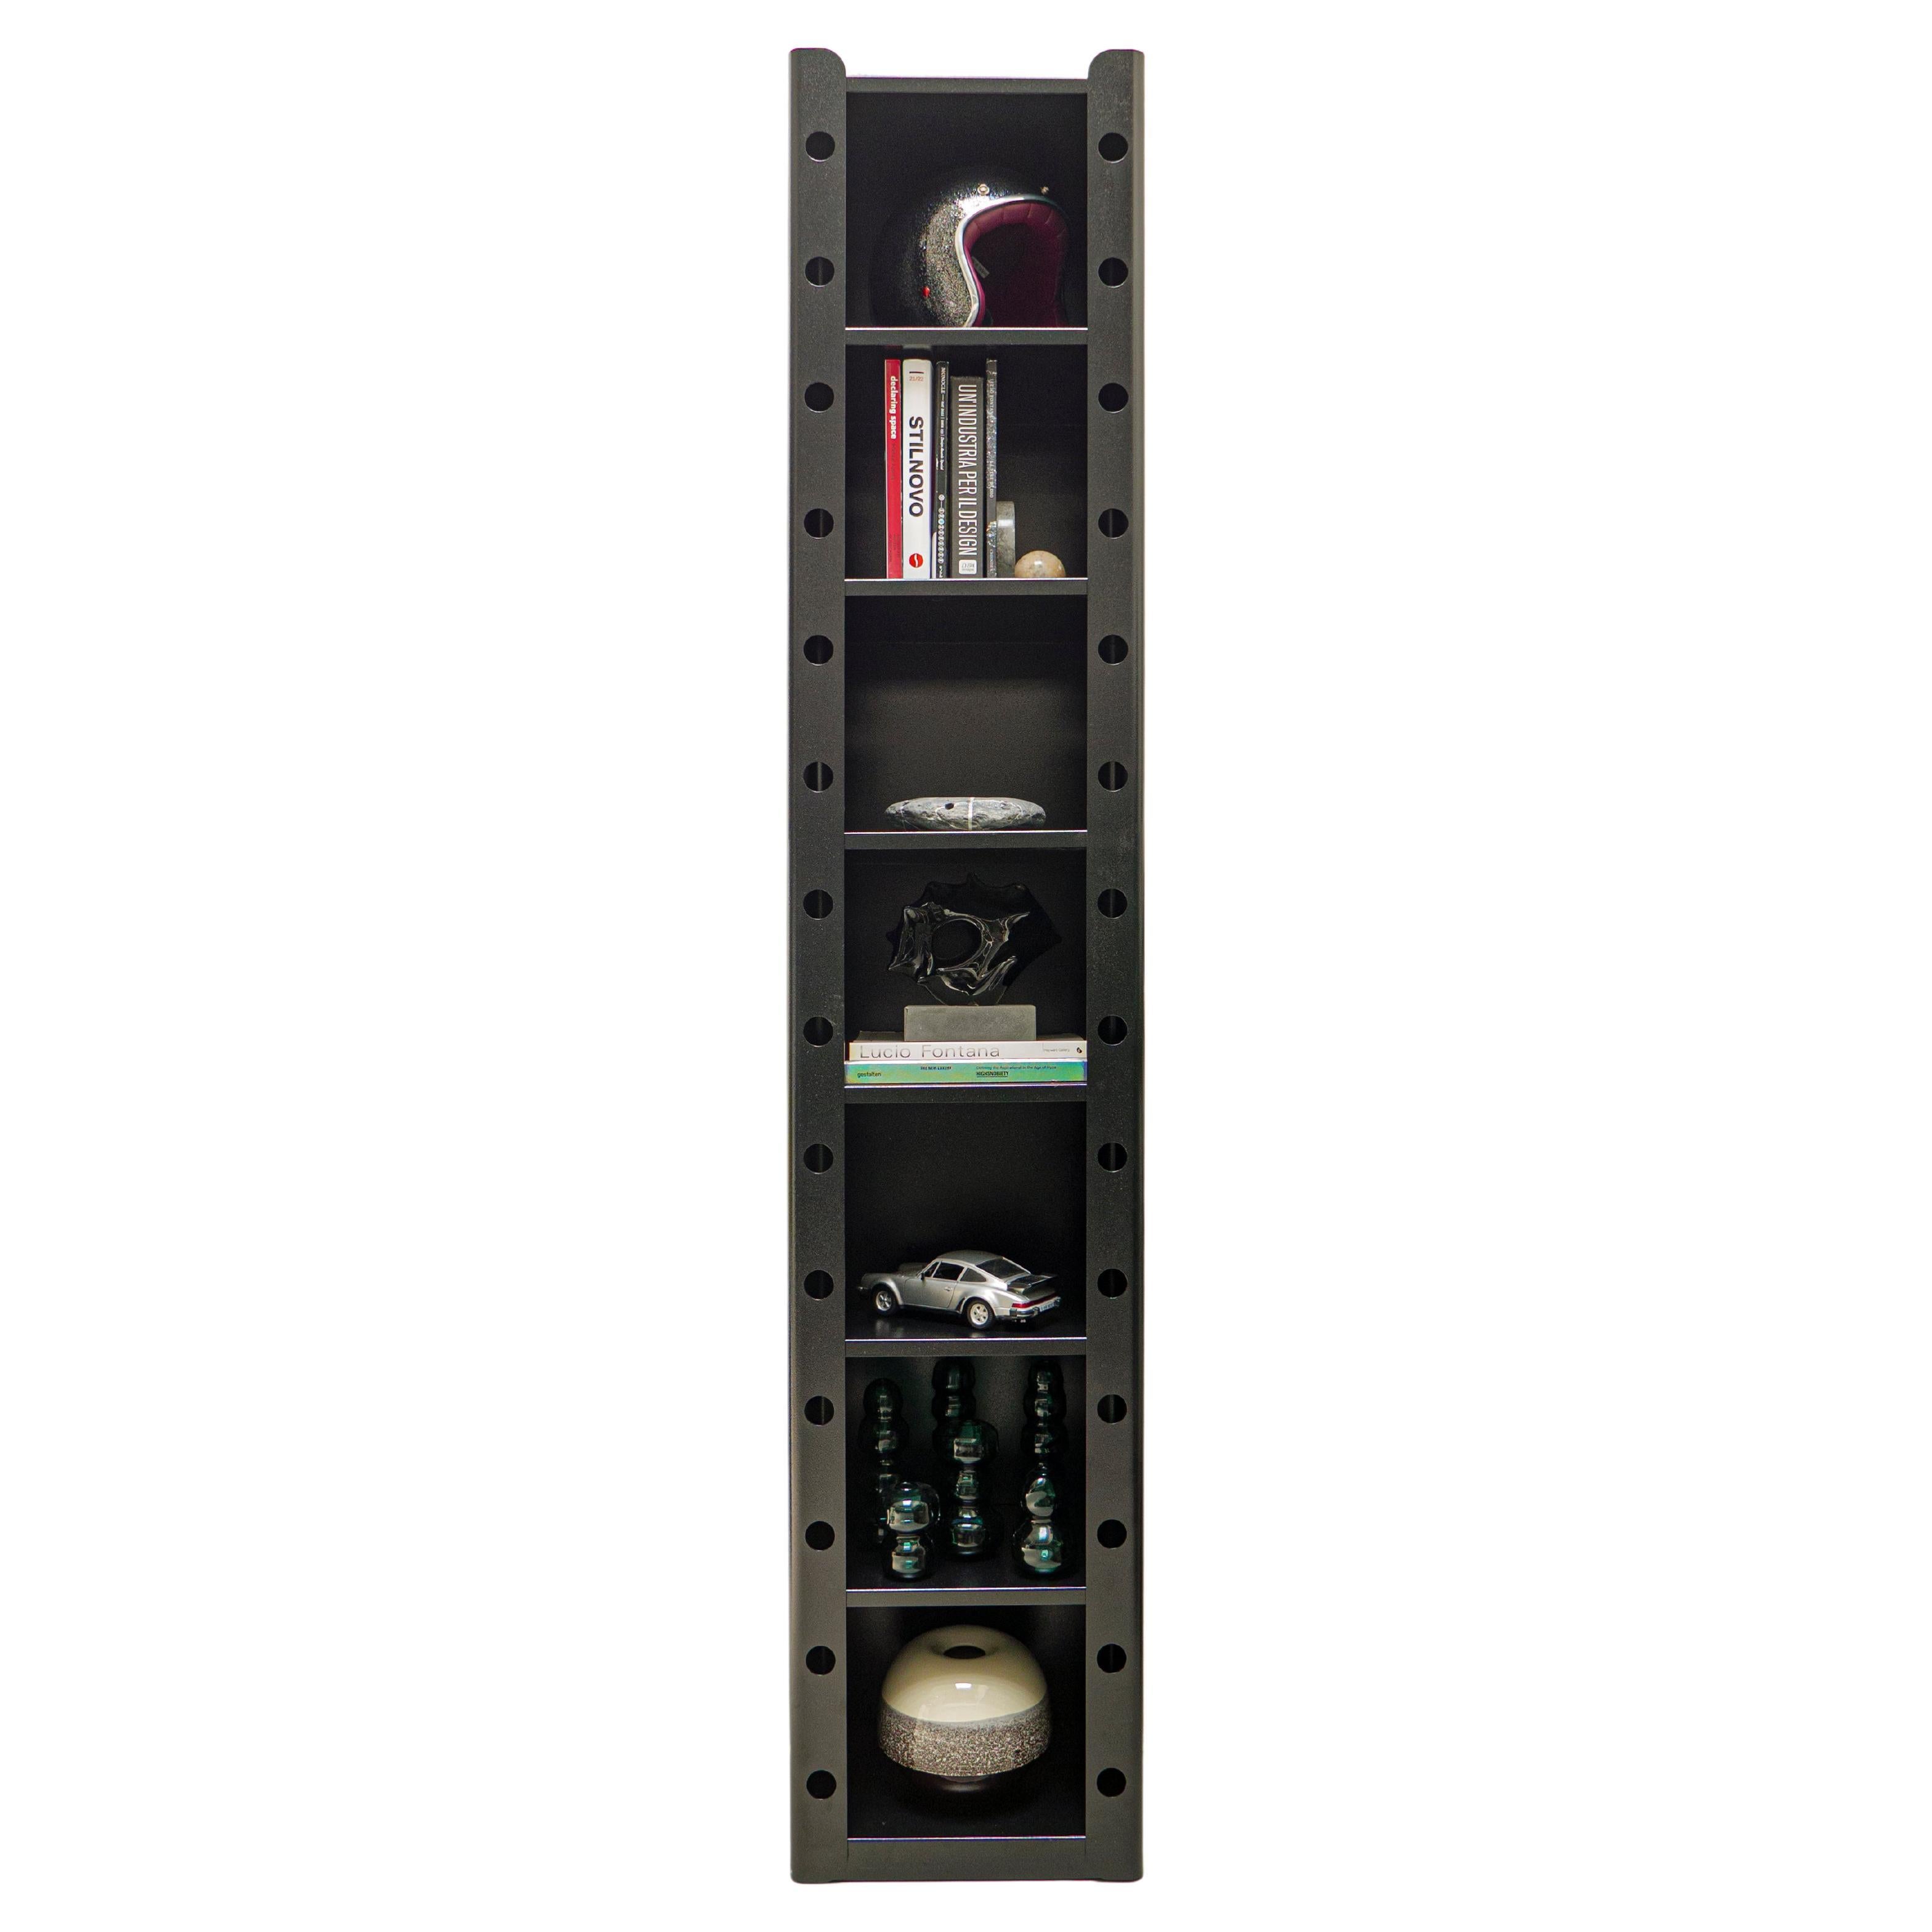 Spinzi Meccano Bookcase, Contemporary 21st Century Industrial Metal Furniture For Sale